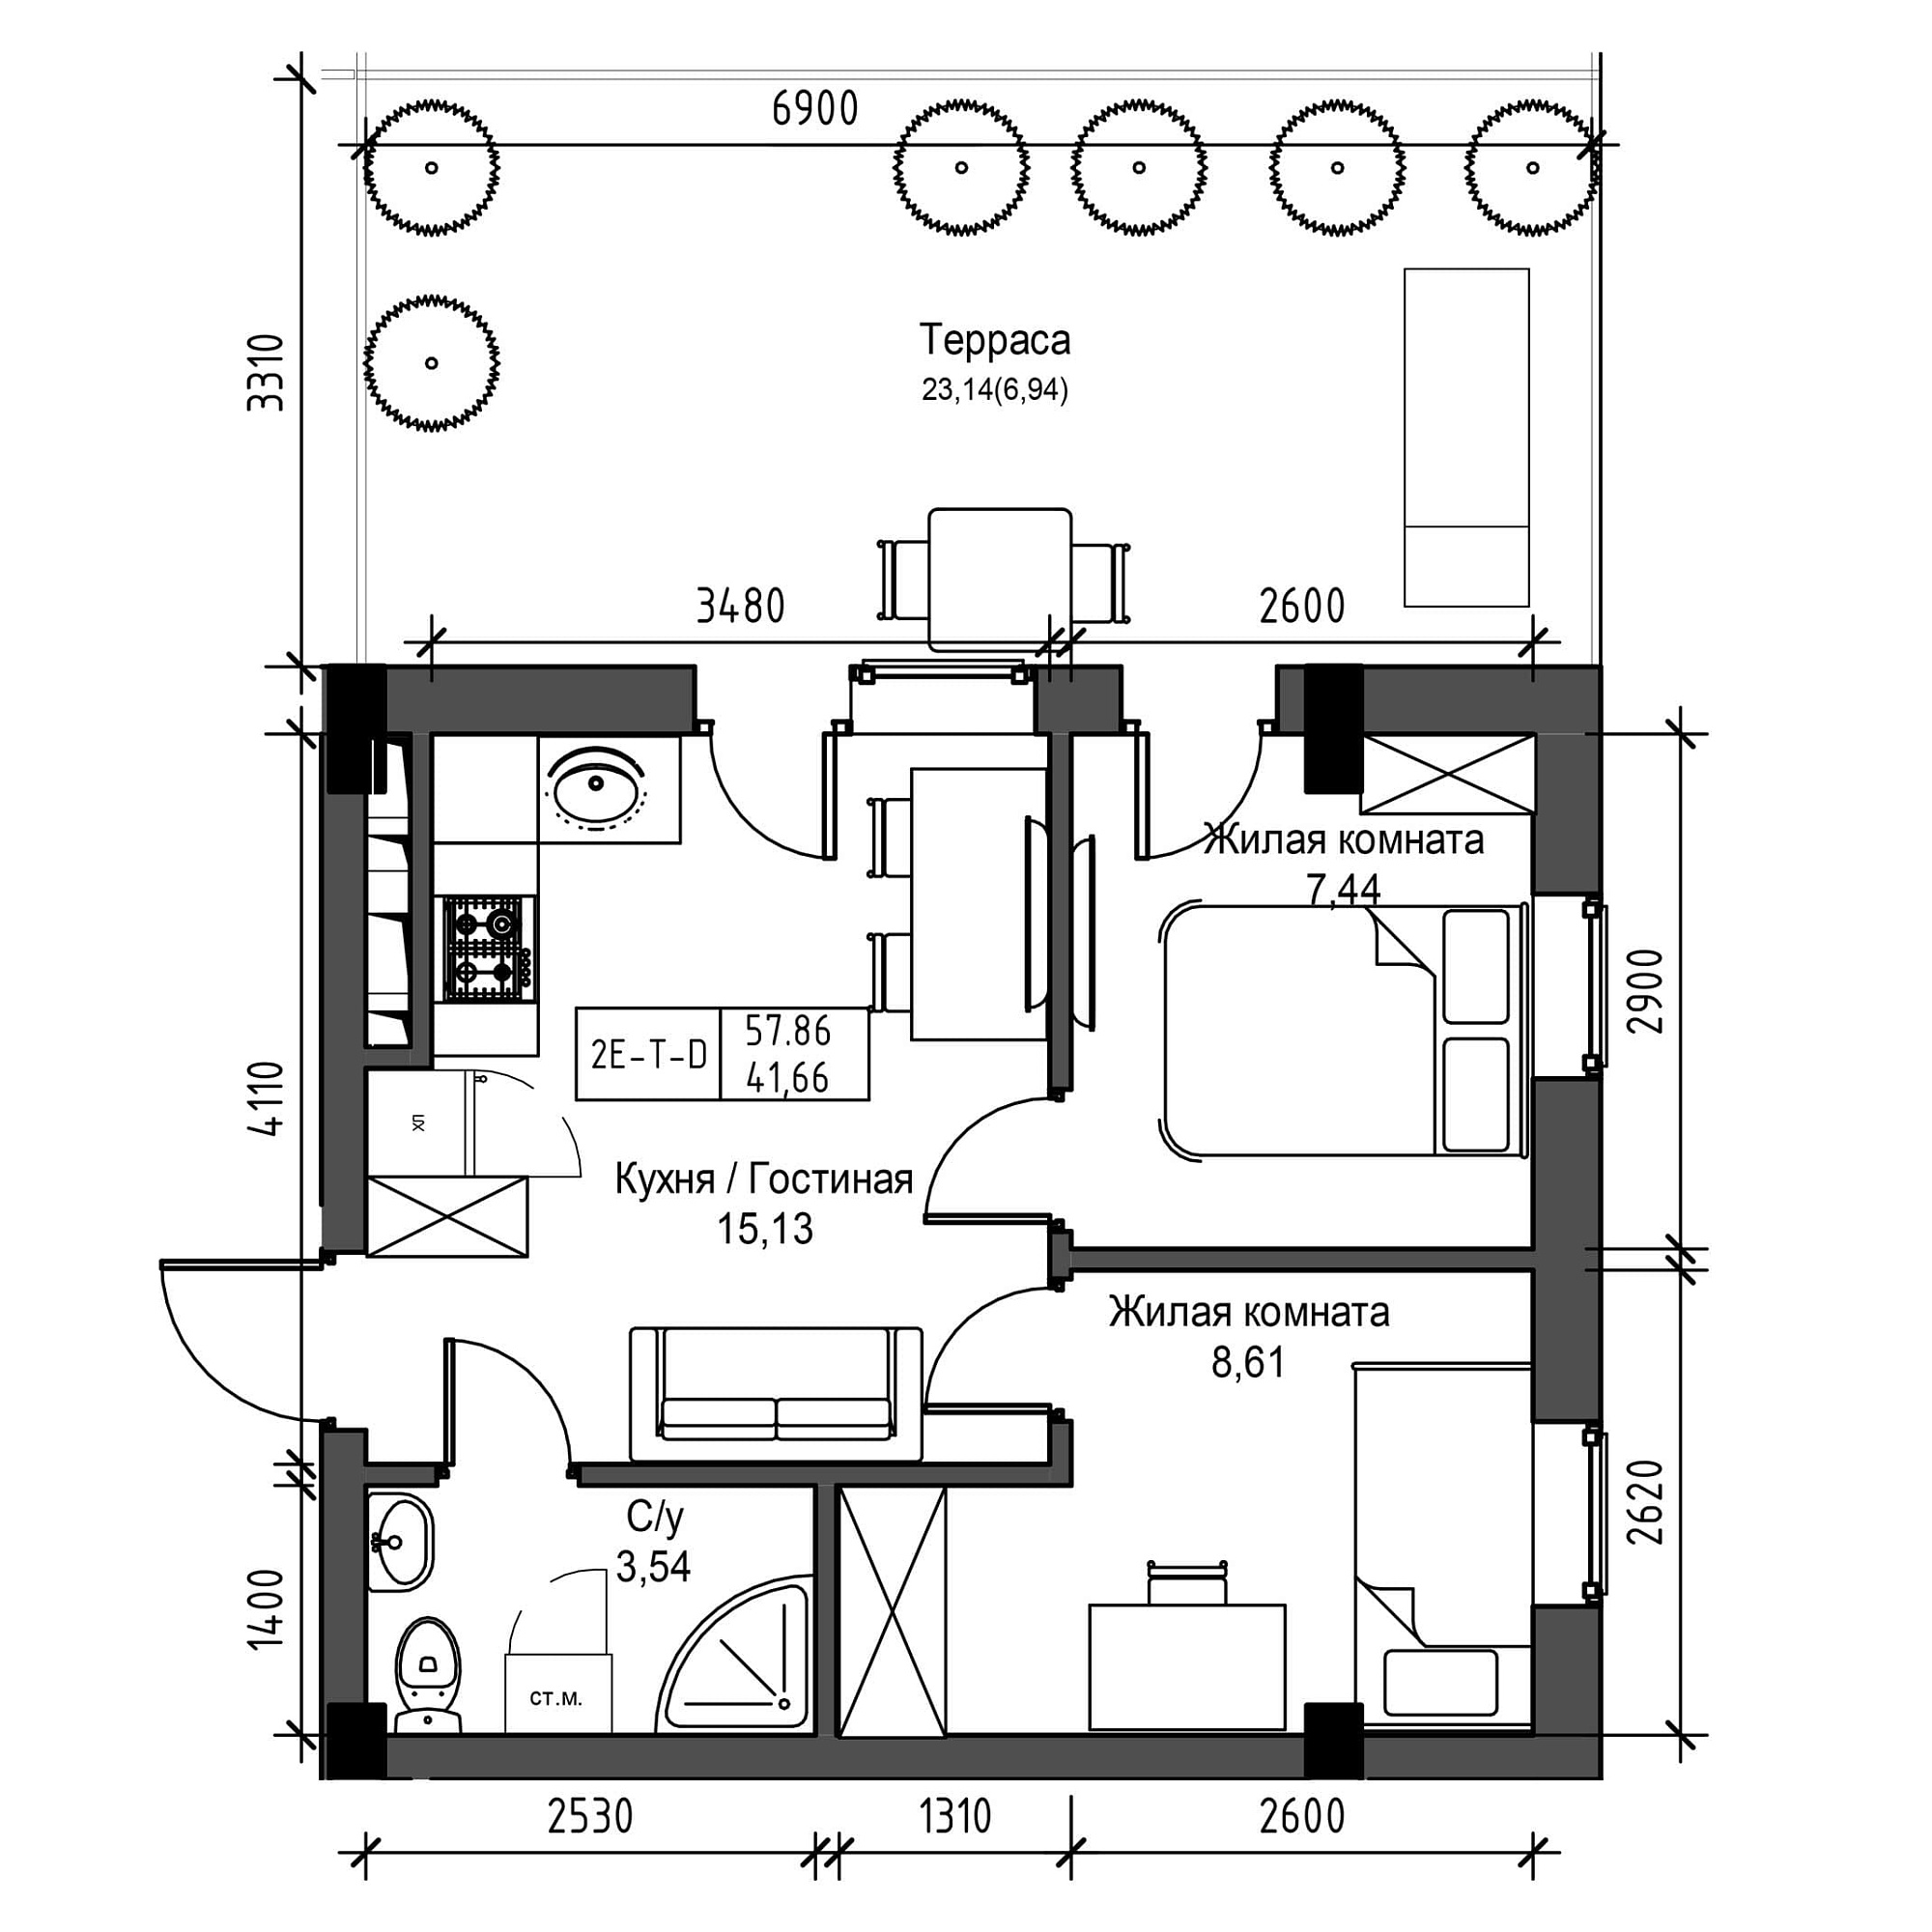 Планування 2-к квартира площею 41.66м2, UM-001-07/0022.